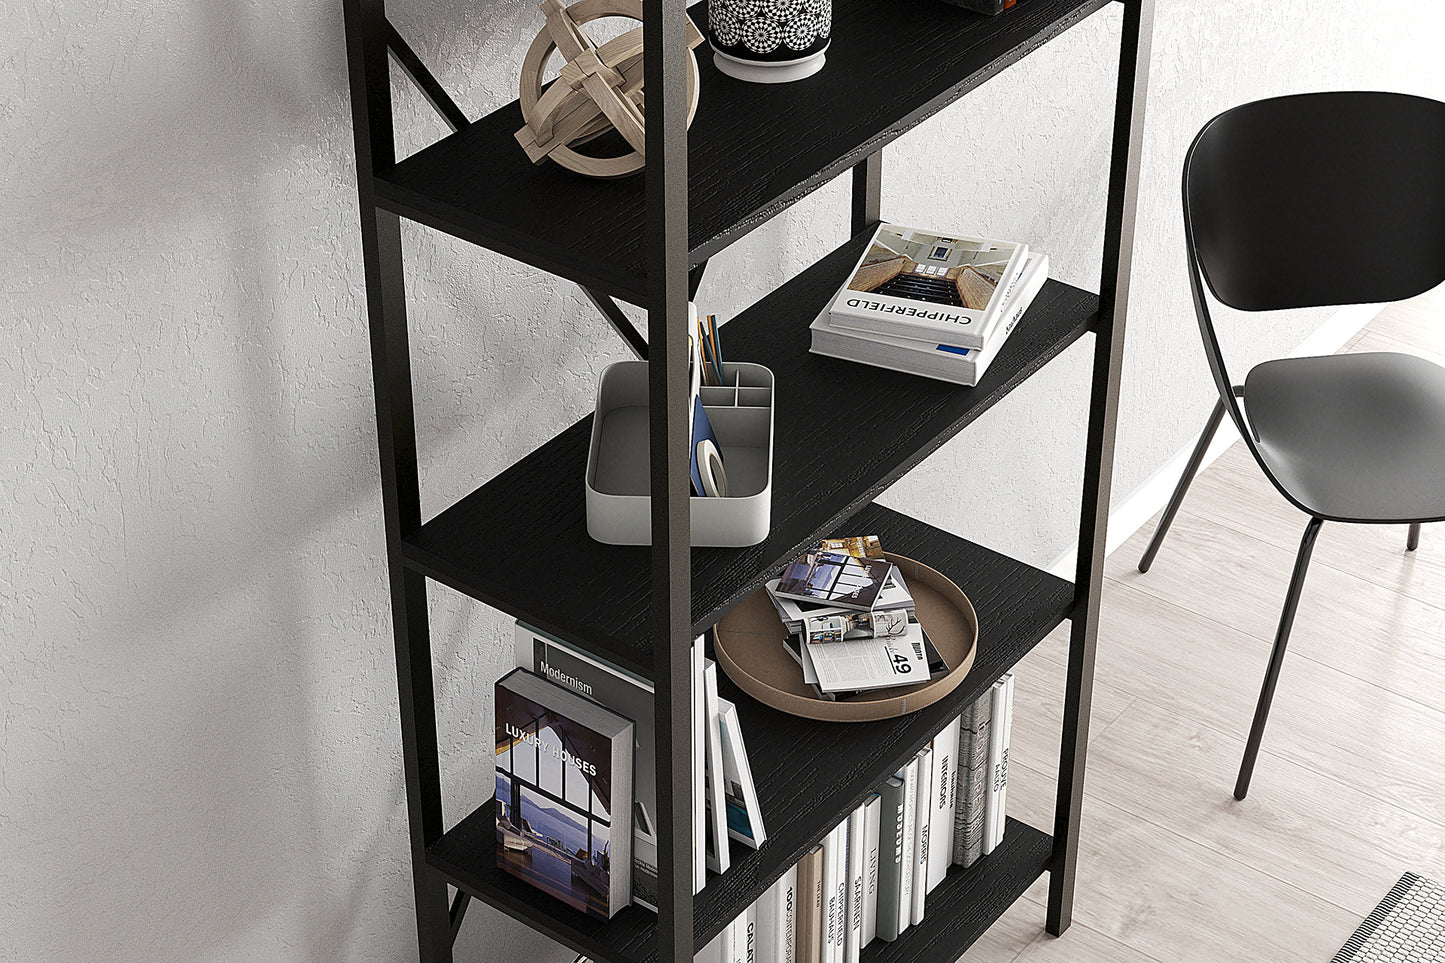 Lugo Black 5 Shelf Industrial / Modern Design Bookcase - Black